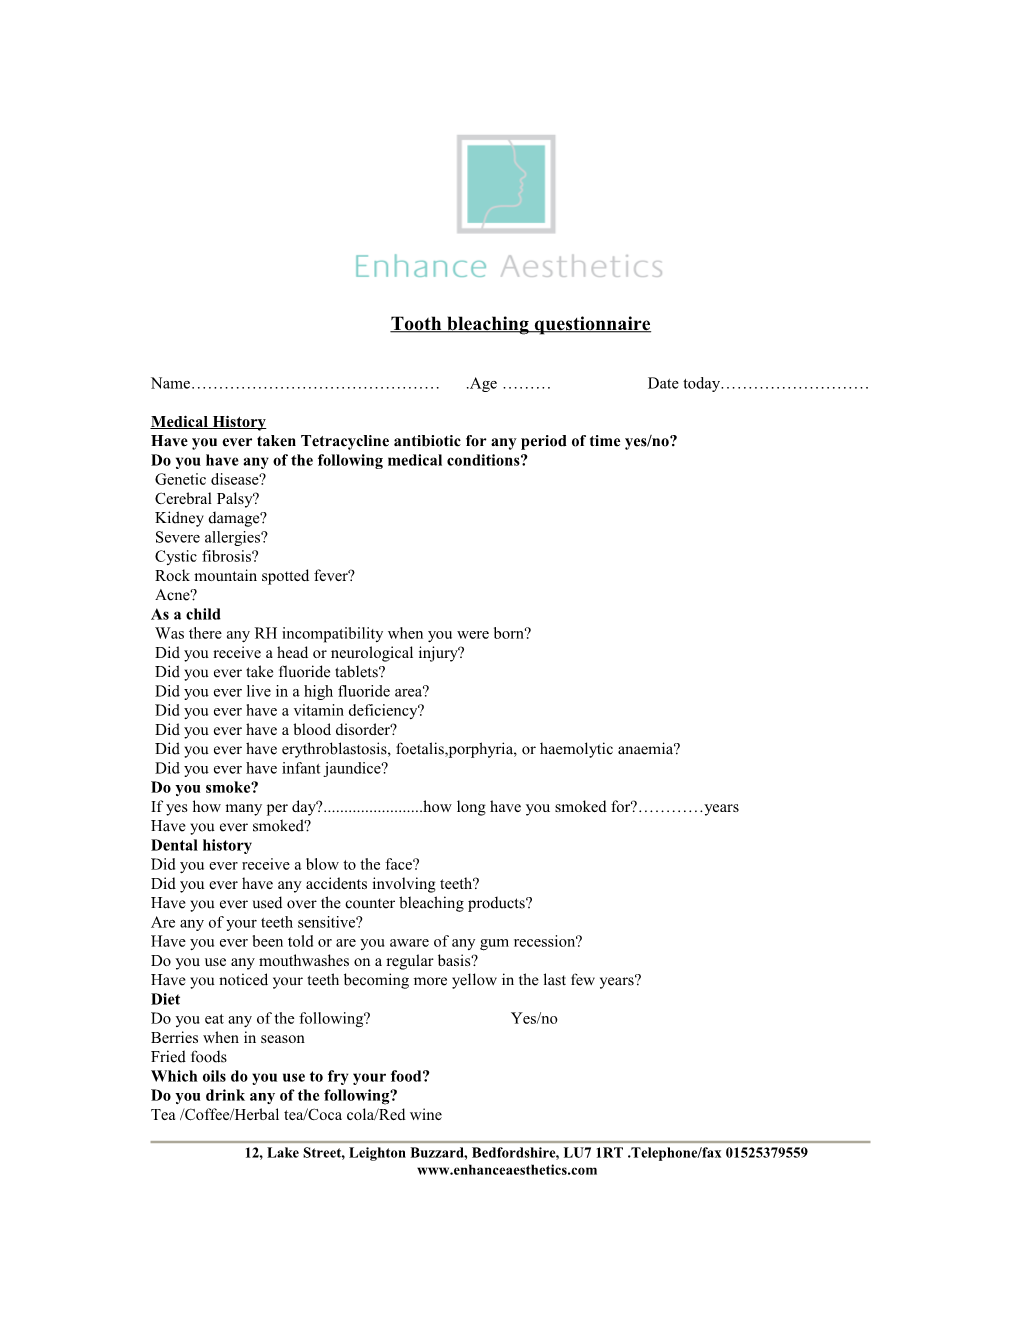 Tooth Bleaching Questionnaire